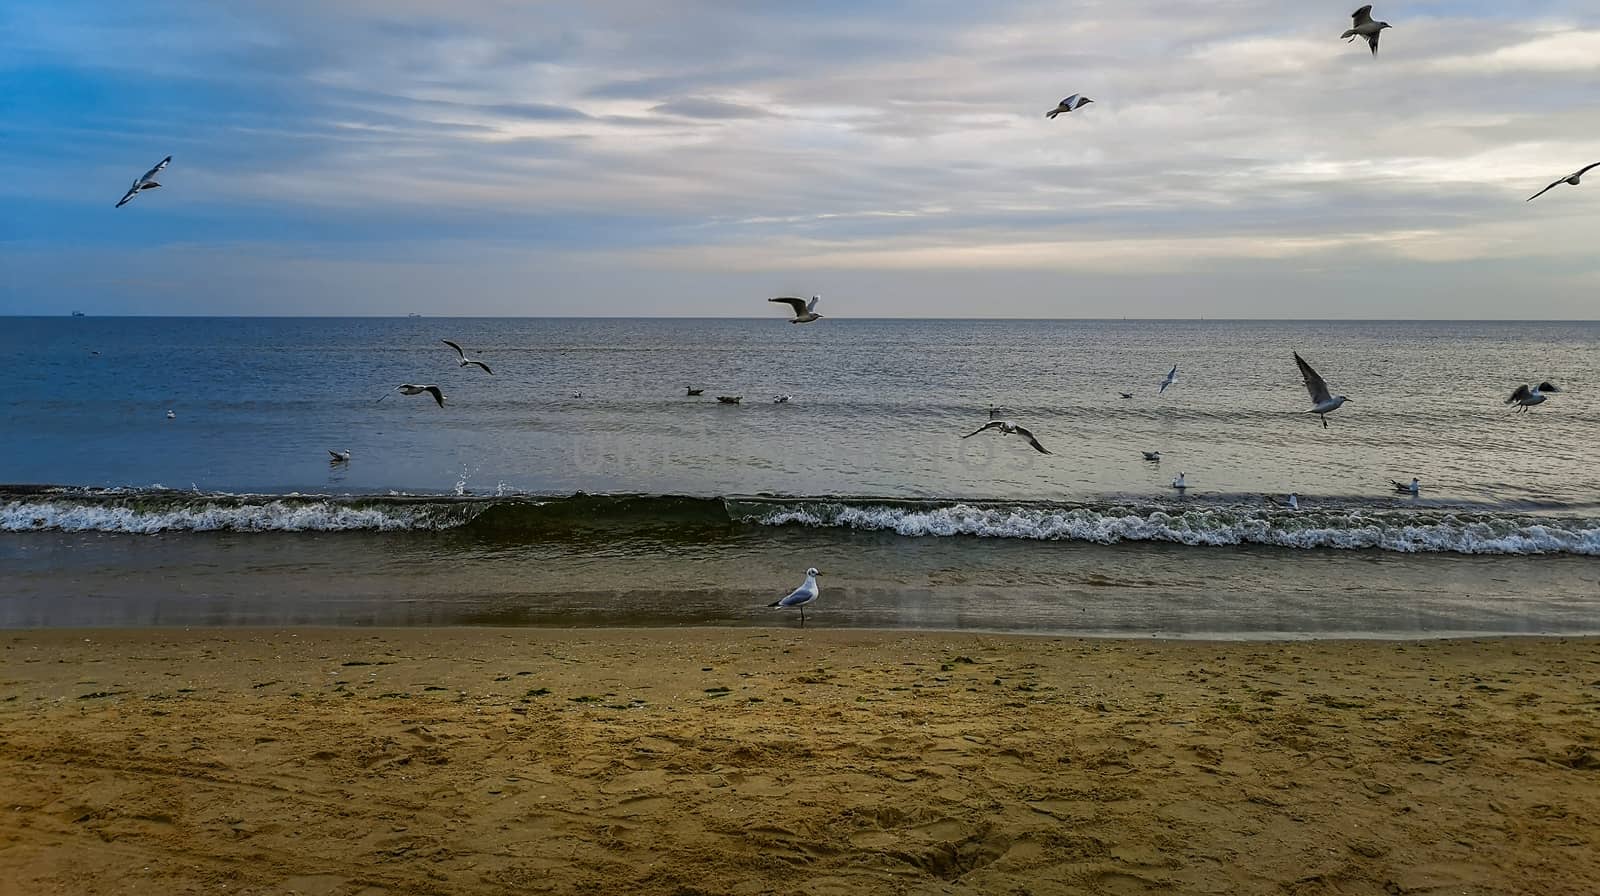 Beach near baltic sea in Swinoujscie in november full of white seagulls by Wierzchu